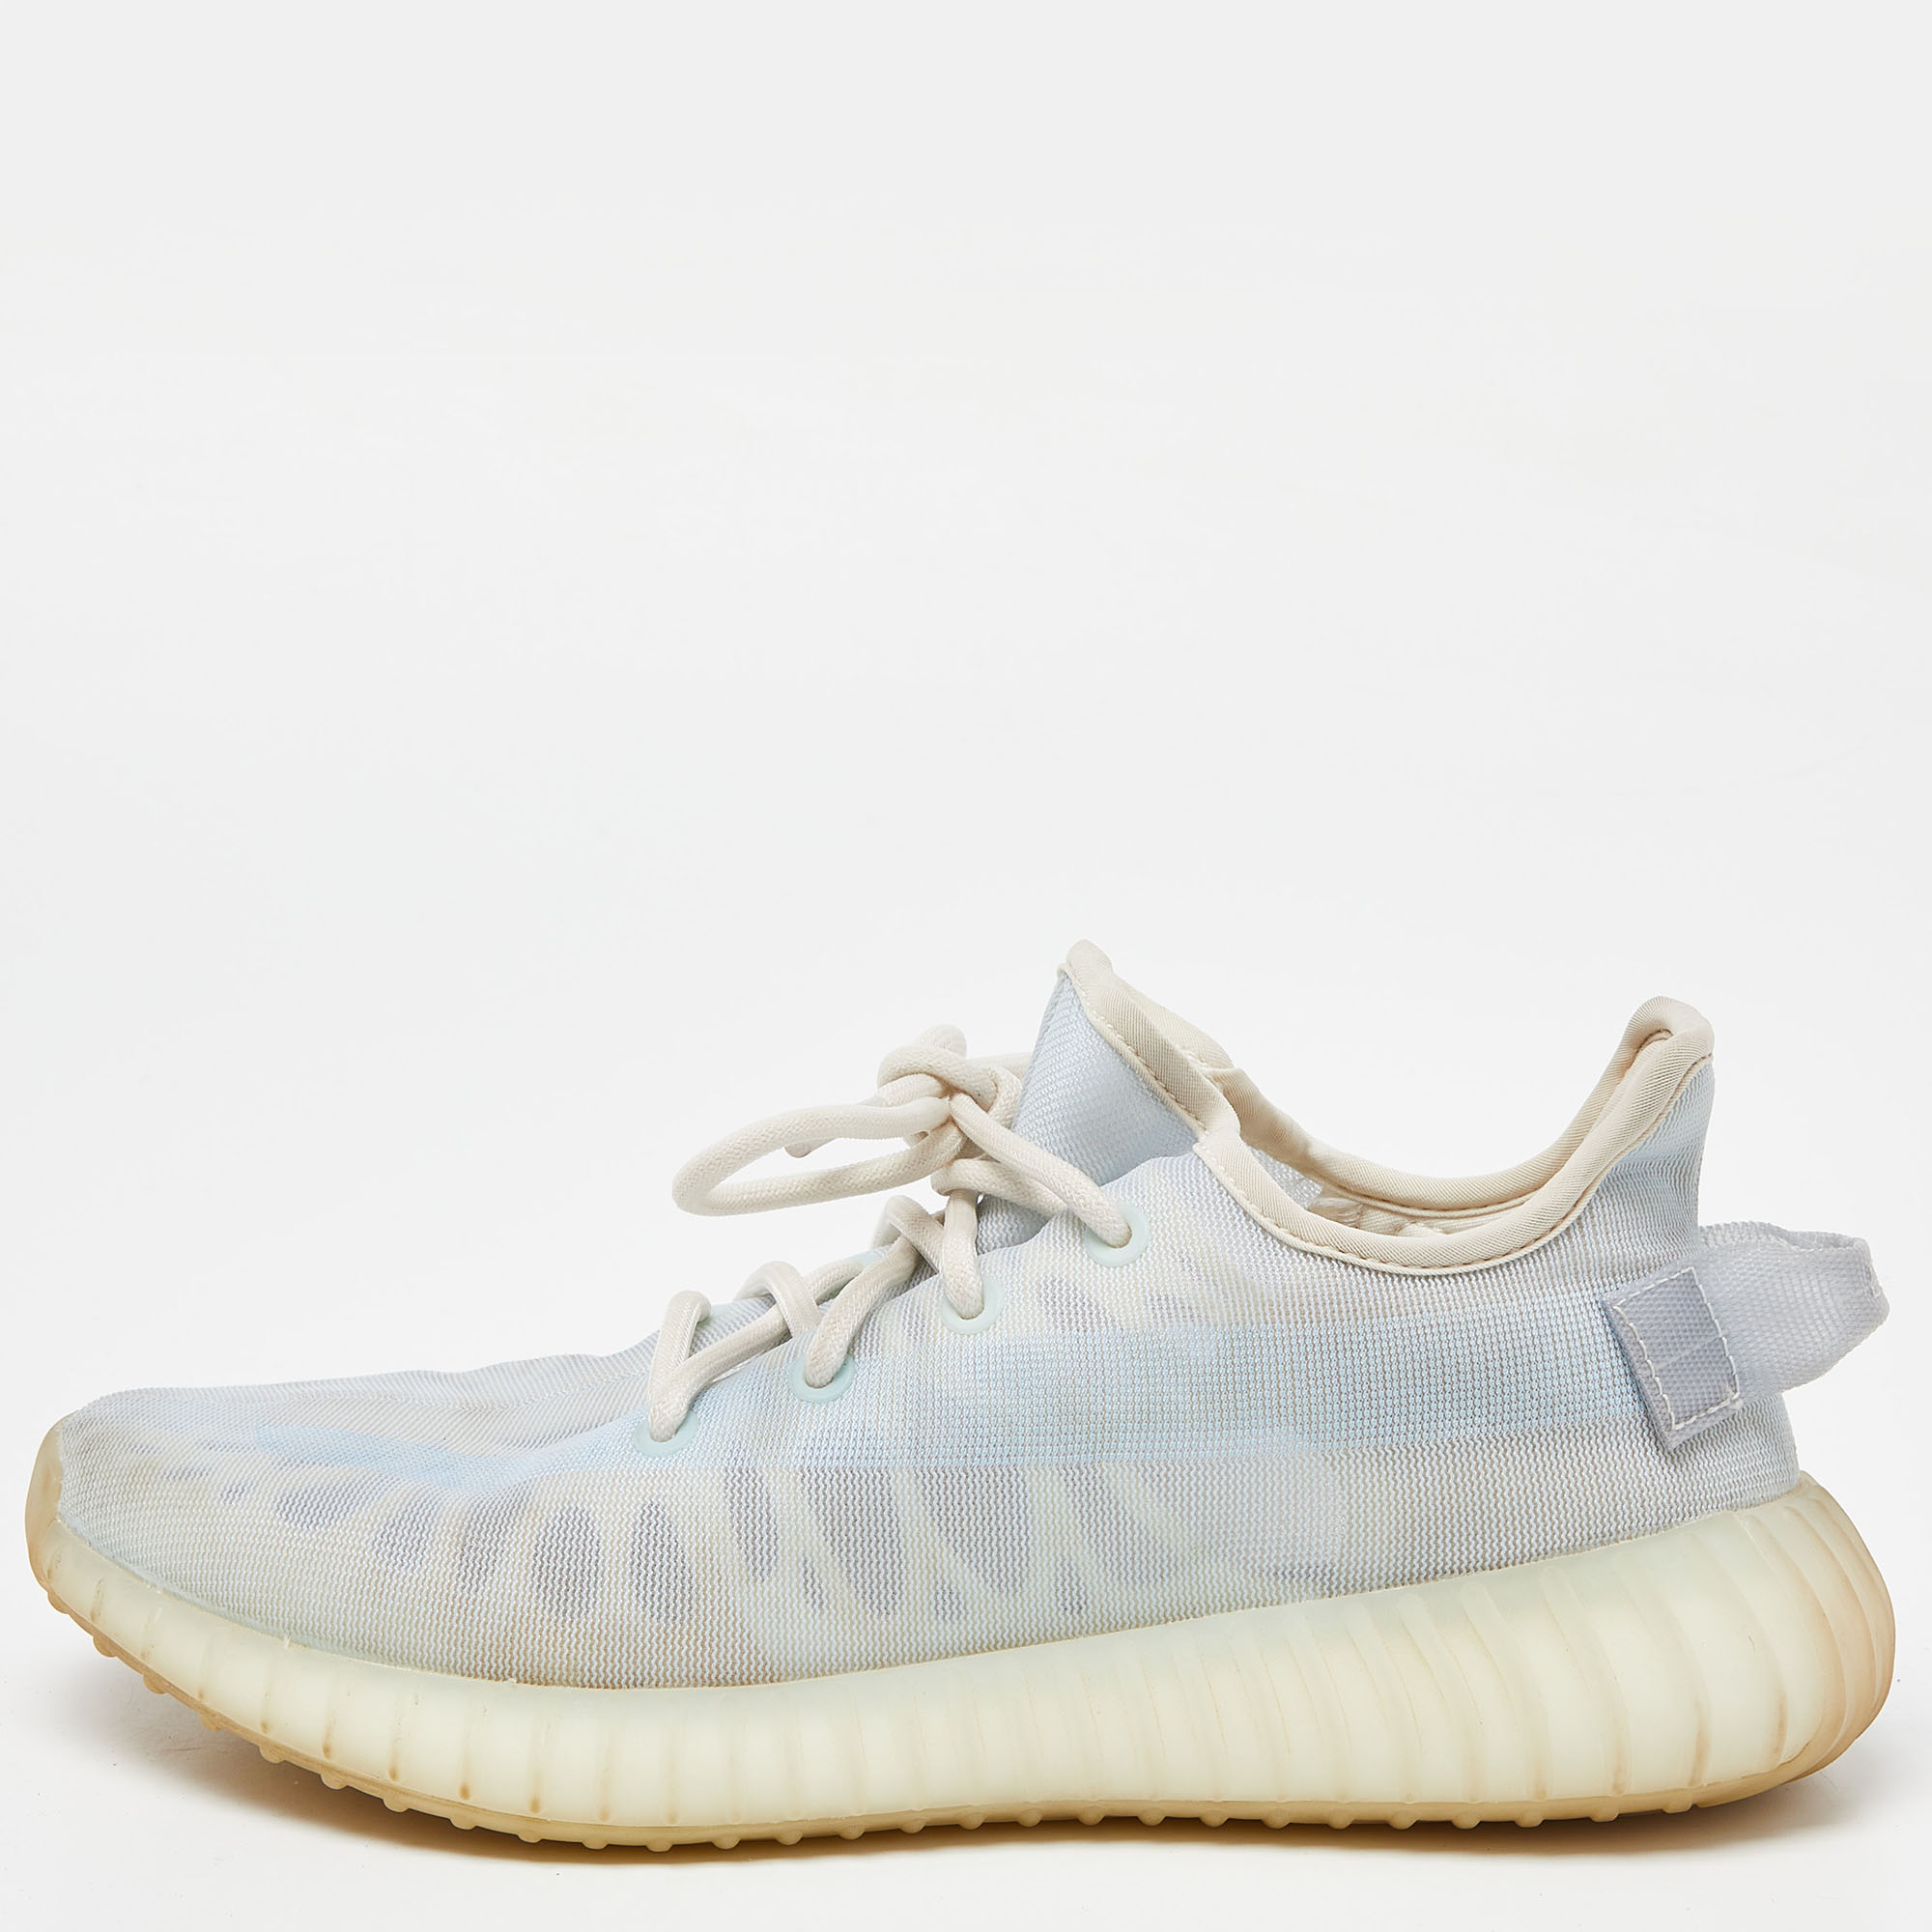 Yeezy x adidas blue/white mesh boost 350 v2 mono ice sneakers size 39 1/3